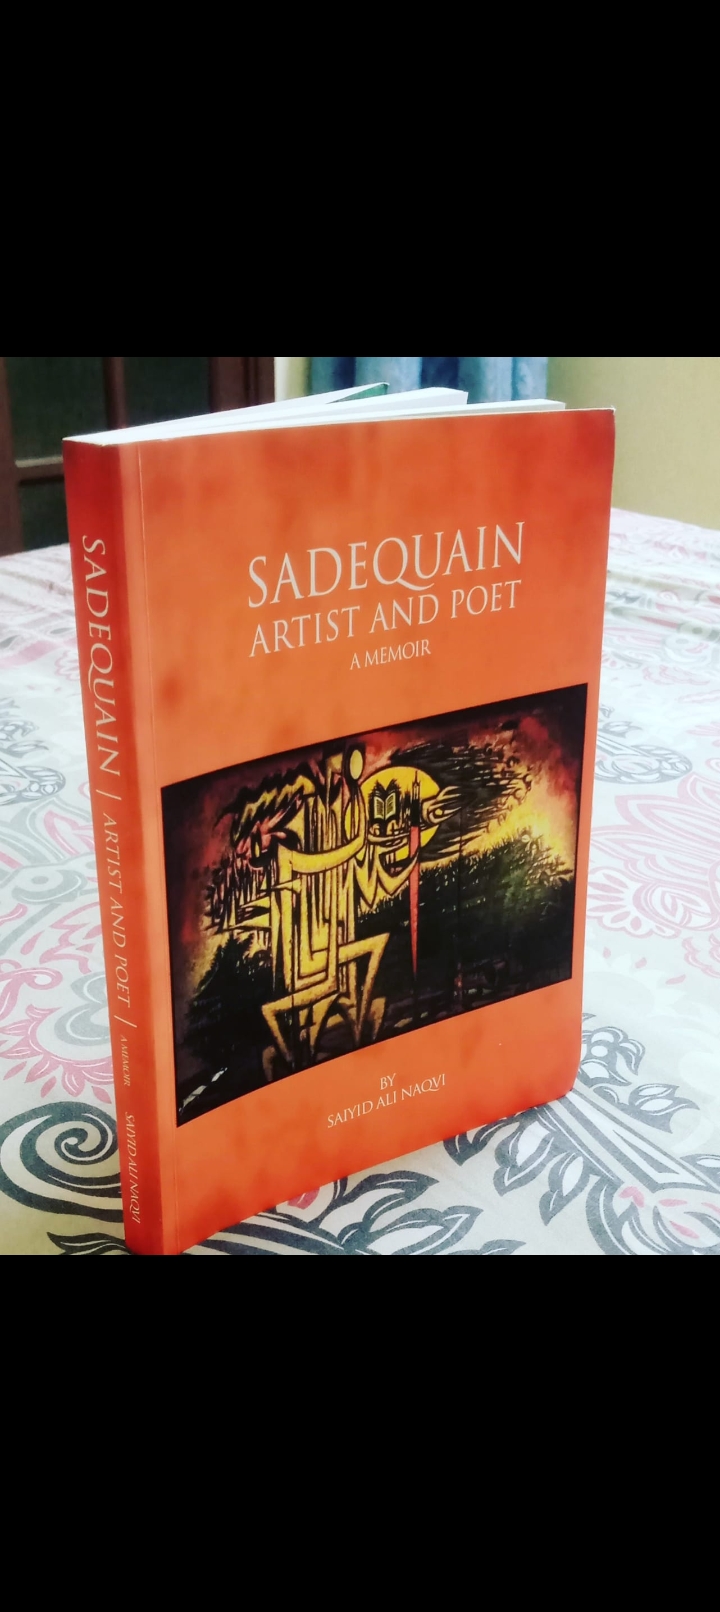 sadequain artist and poet a memoir by saiyid ali naqvi. new original